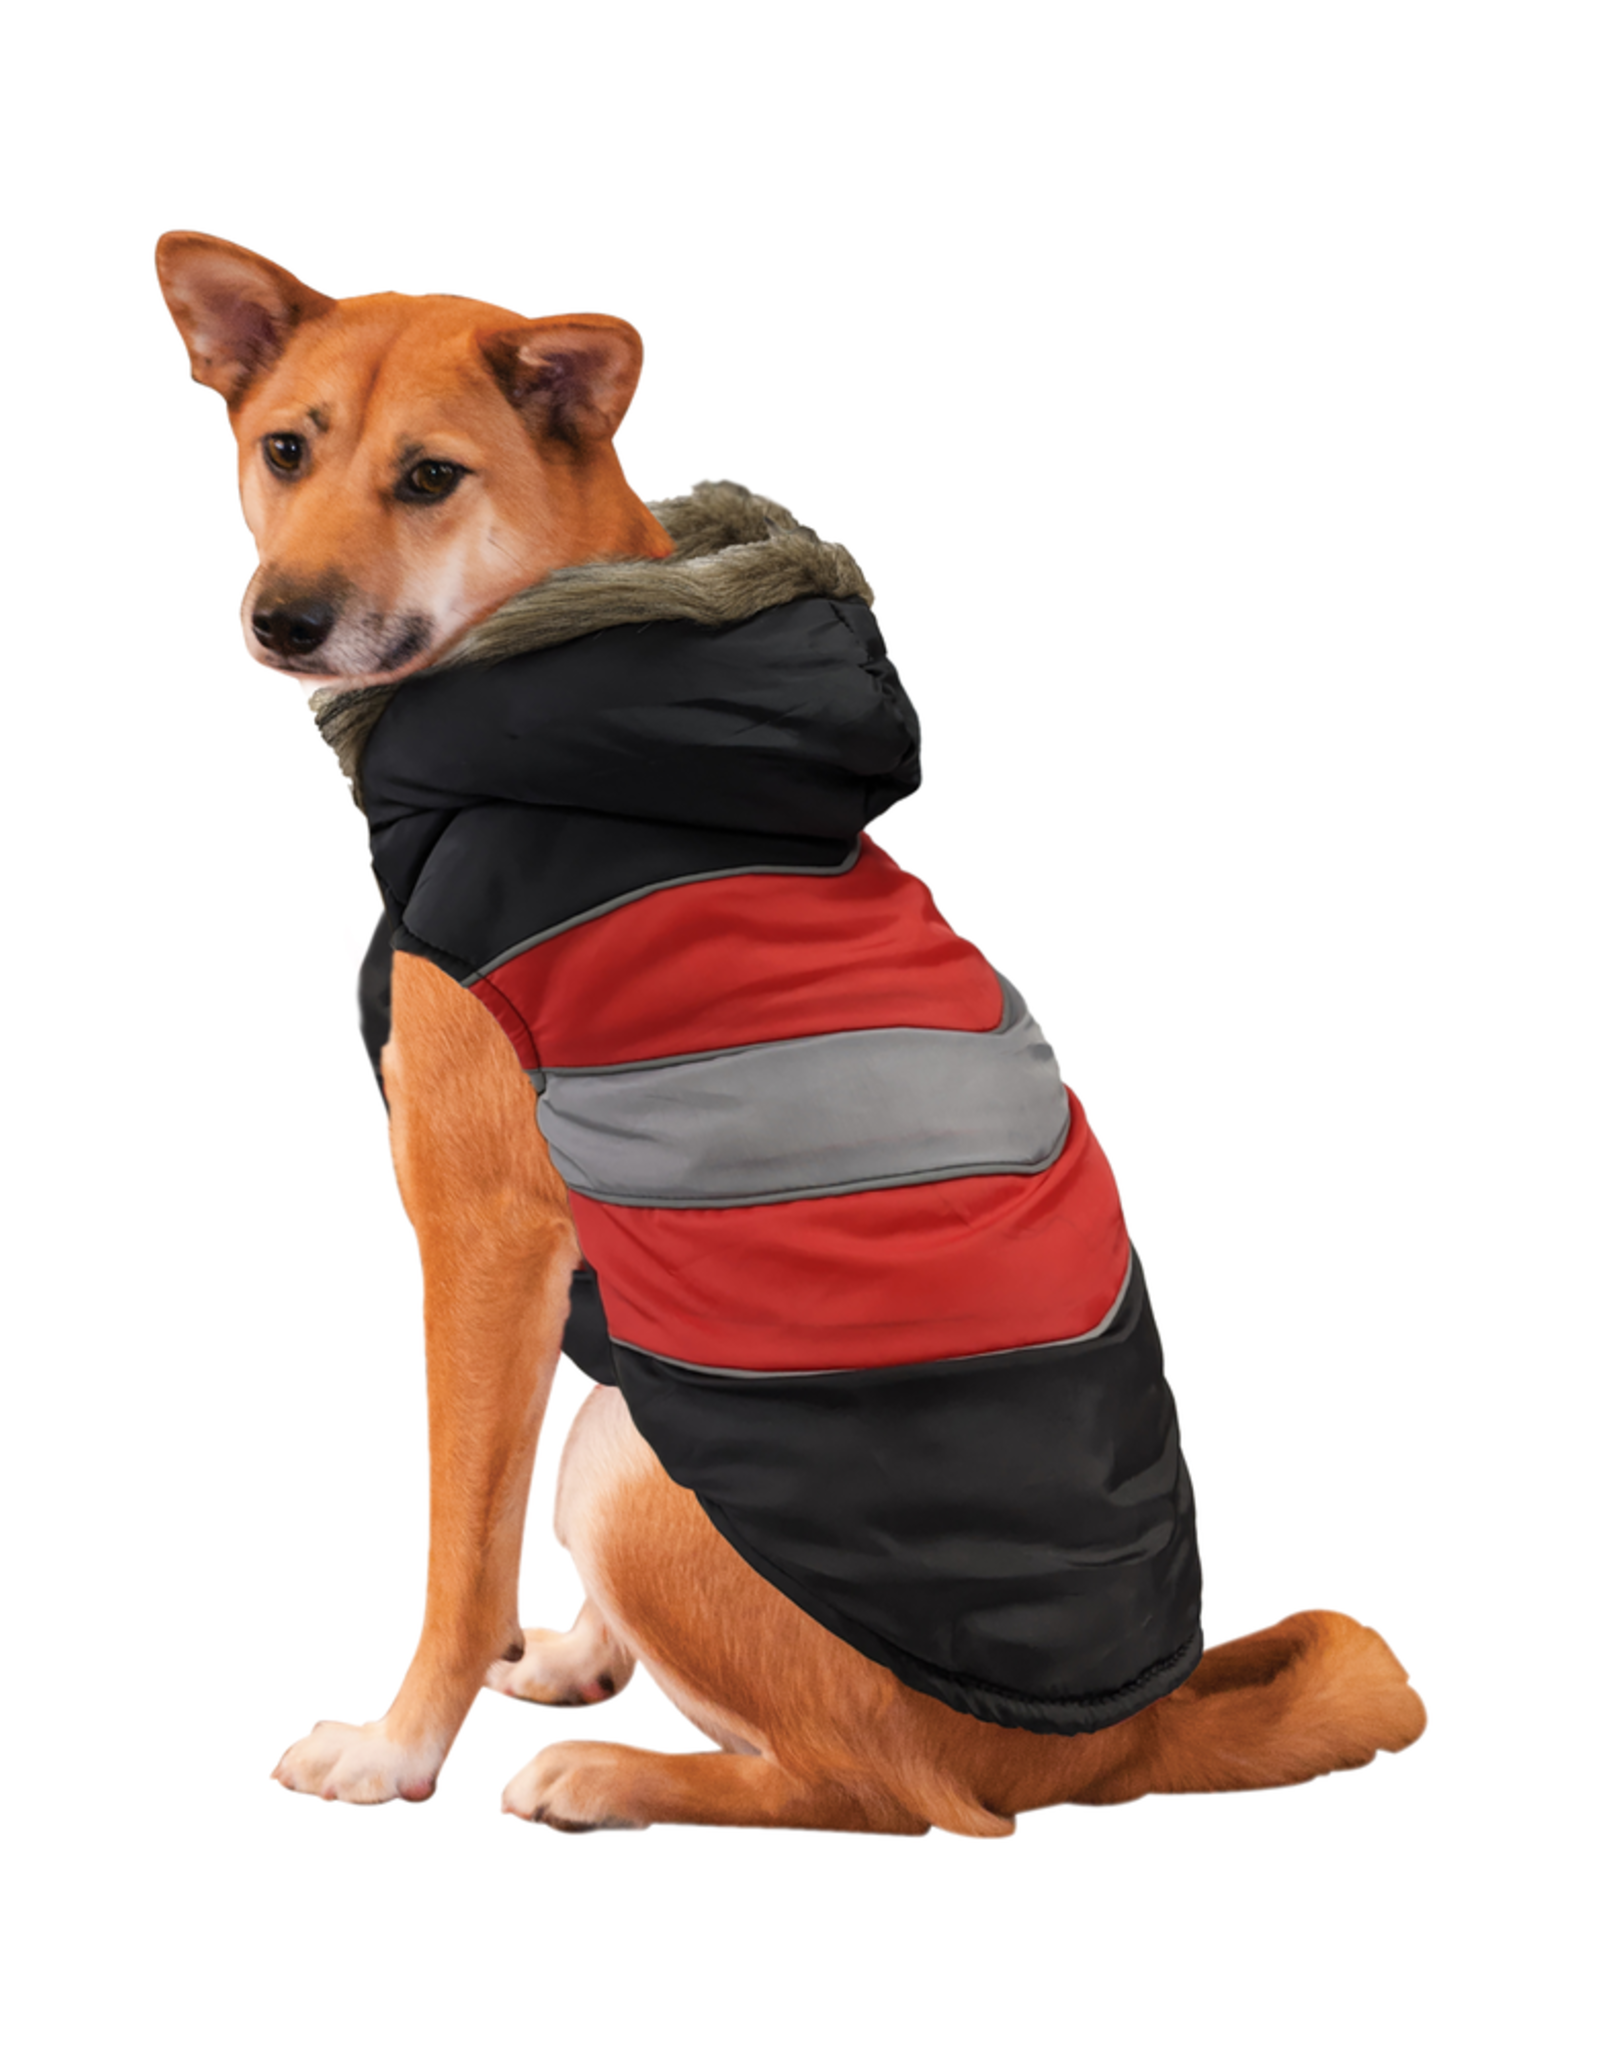 ETHICAL DOG Diagonal Puffy Stripe Coat- Red, Large